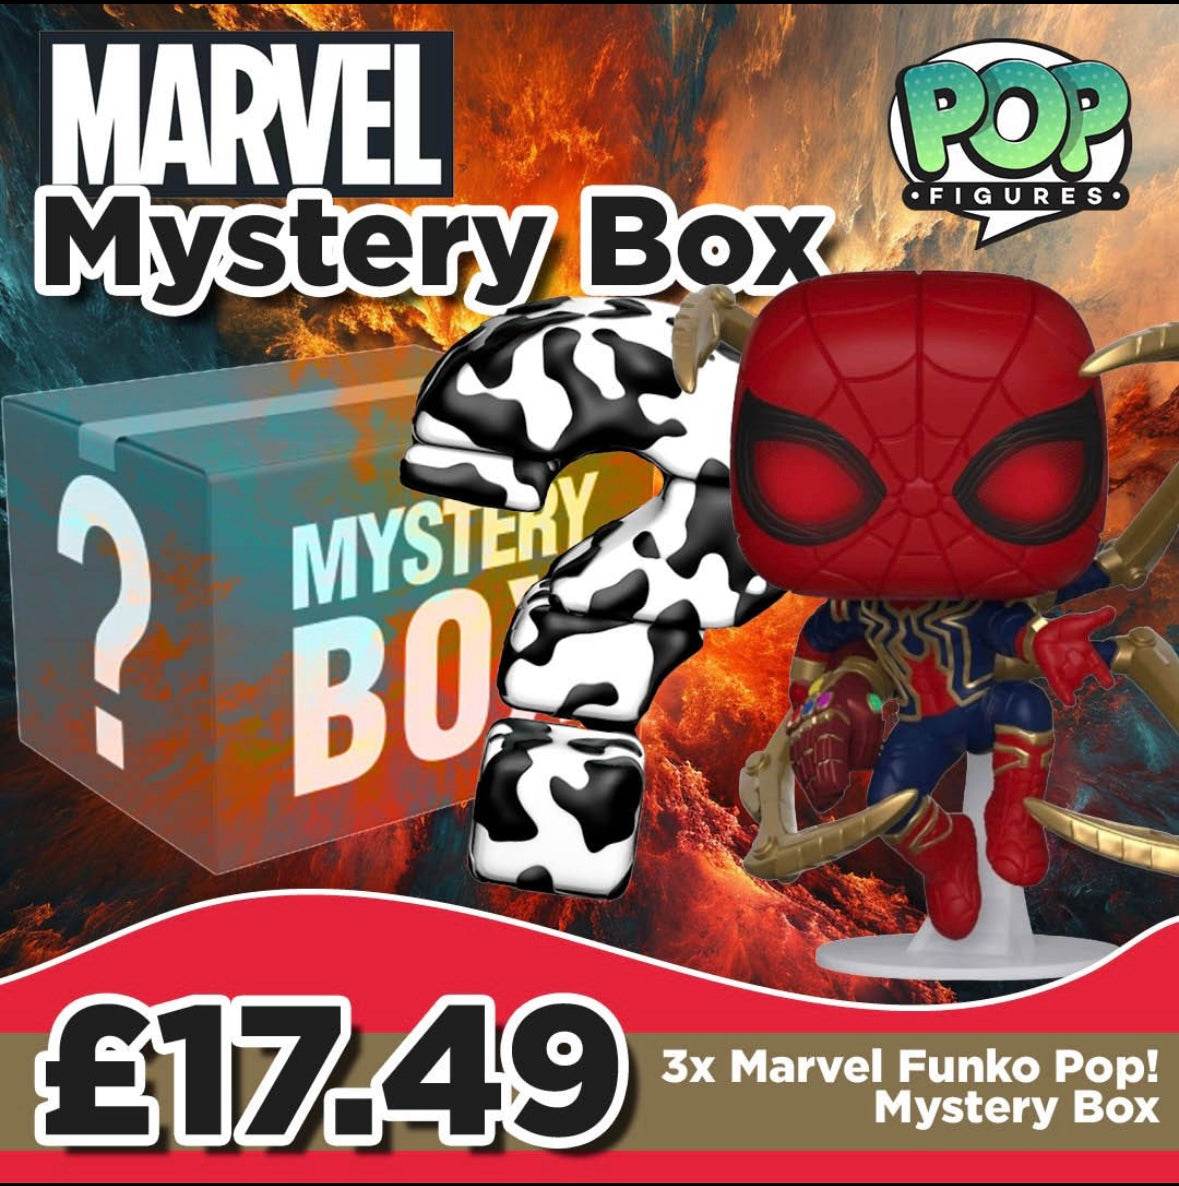 3 Marvel Funko Pop Mystery Box!